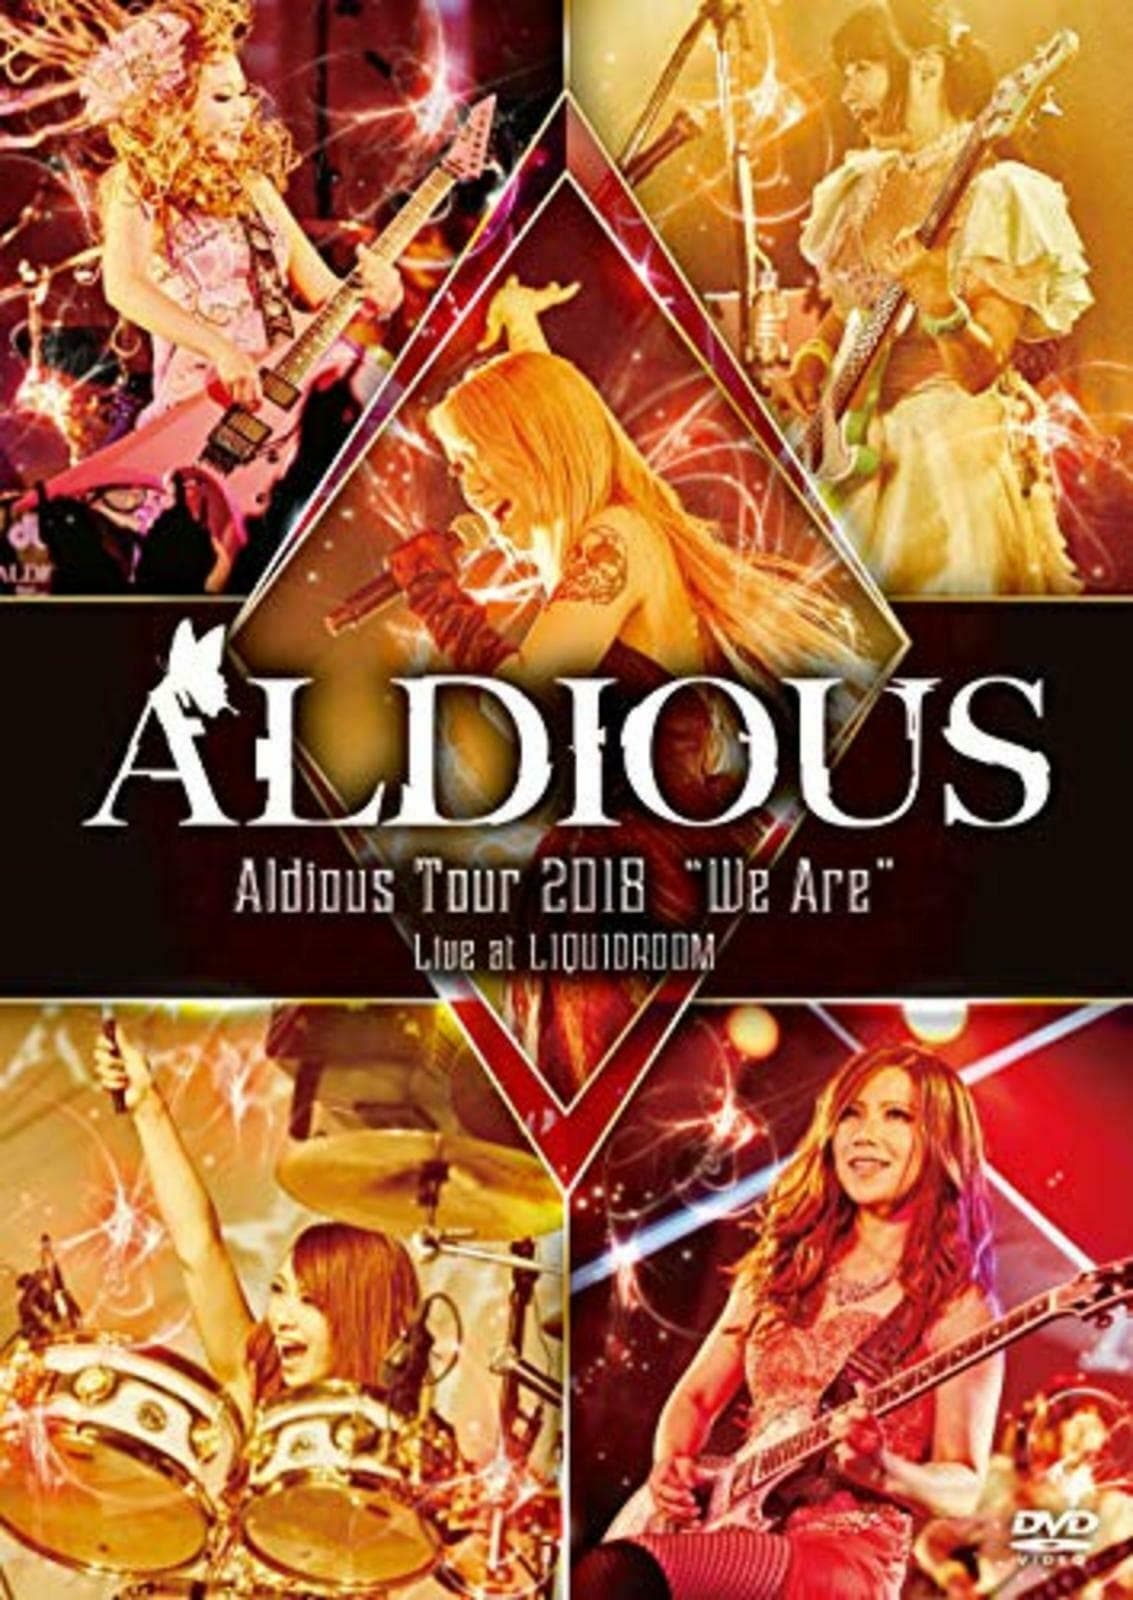 Aldious – Aldious Tour 2018 We Are